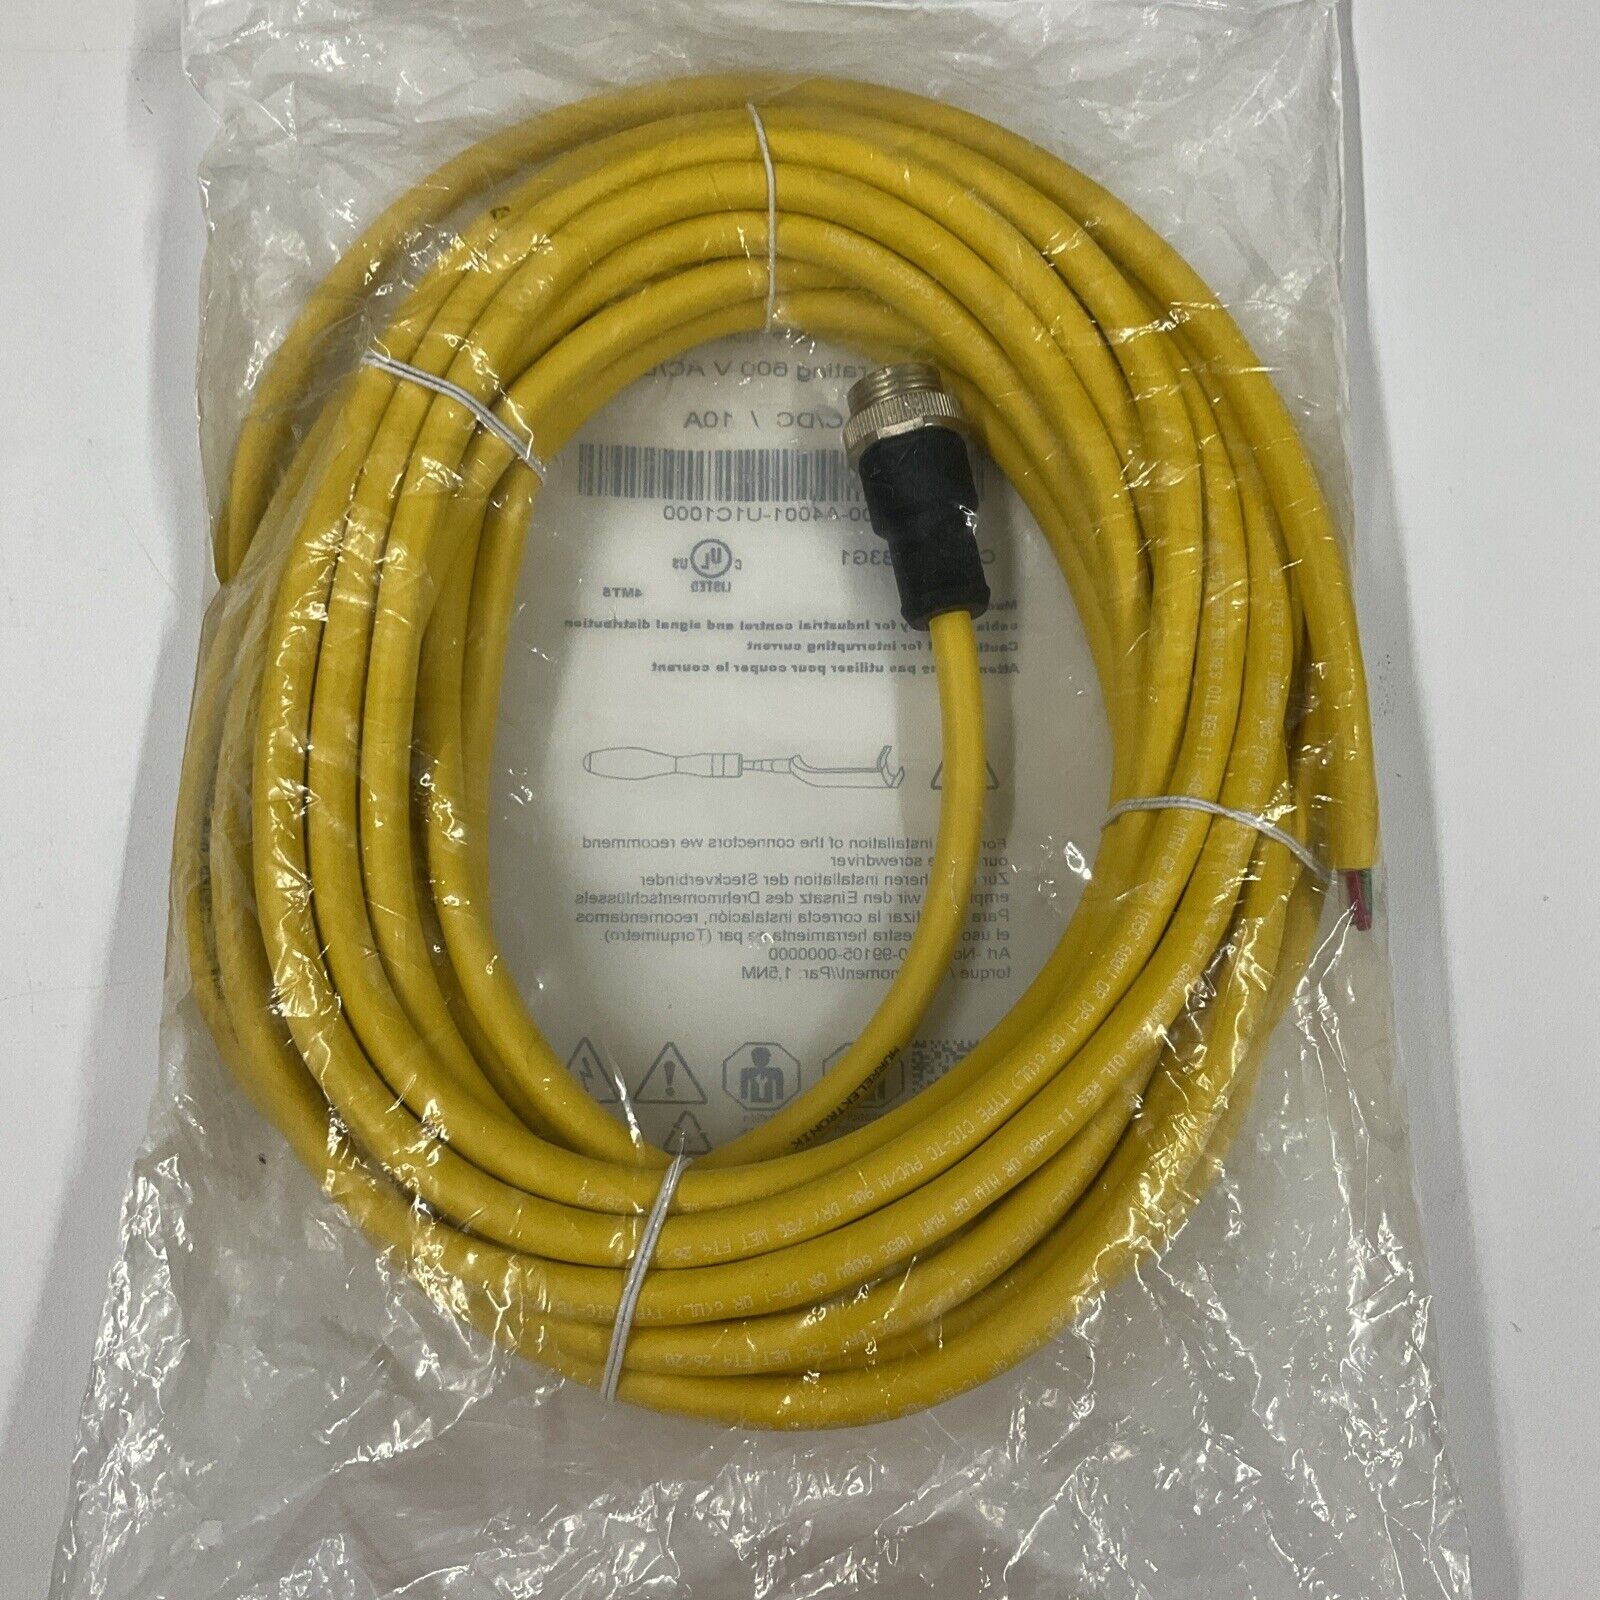 Murr 7700-A4001-U1C1000 Mini 7/8" 4-Pole, Male Power Cable 10 Meters (CBL145)